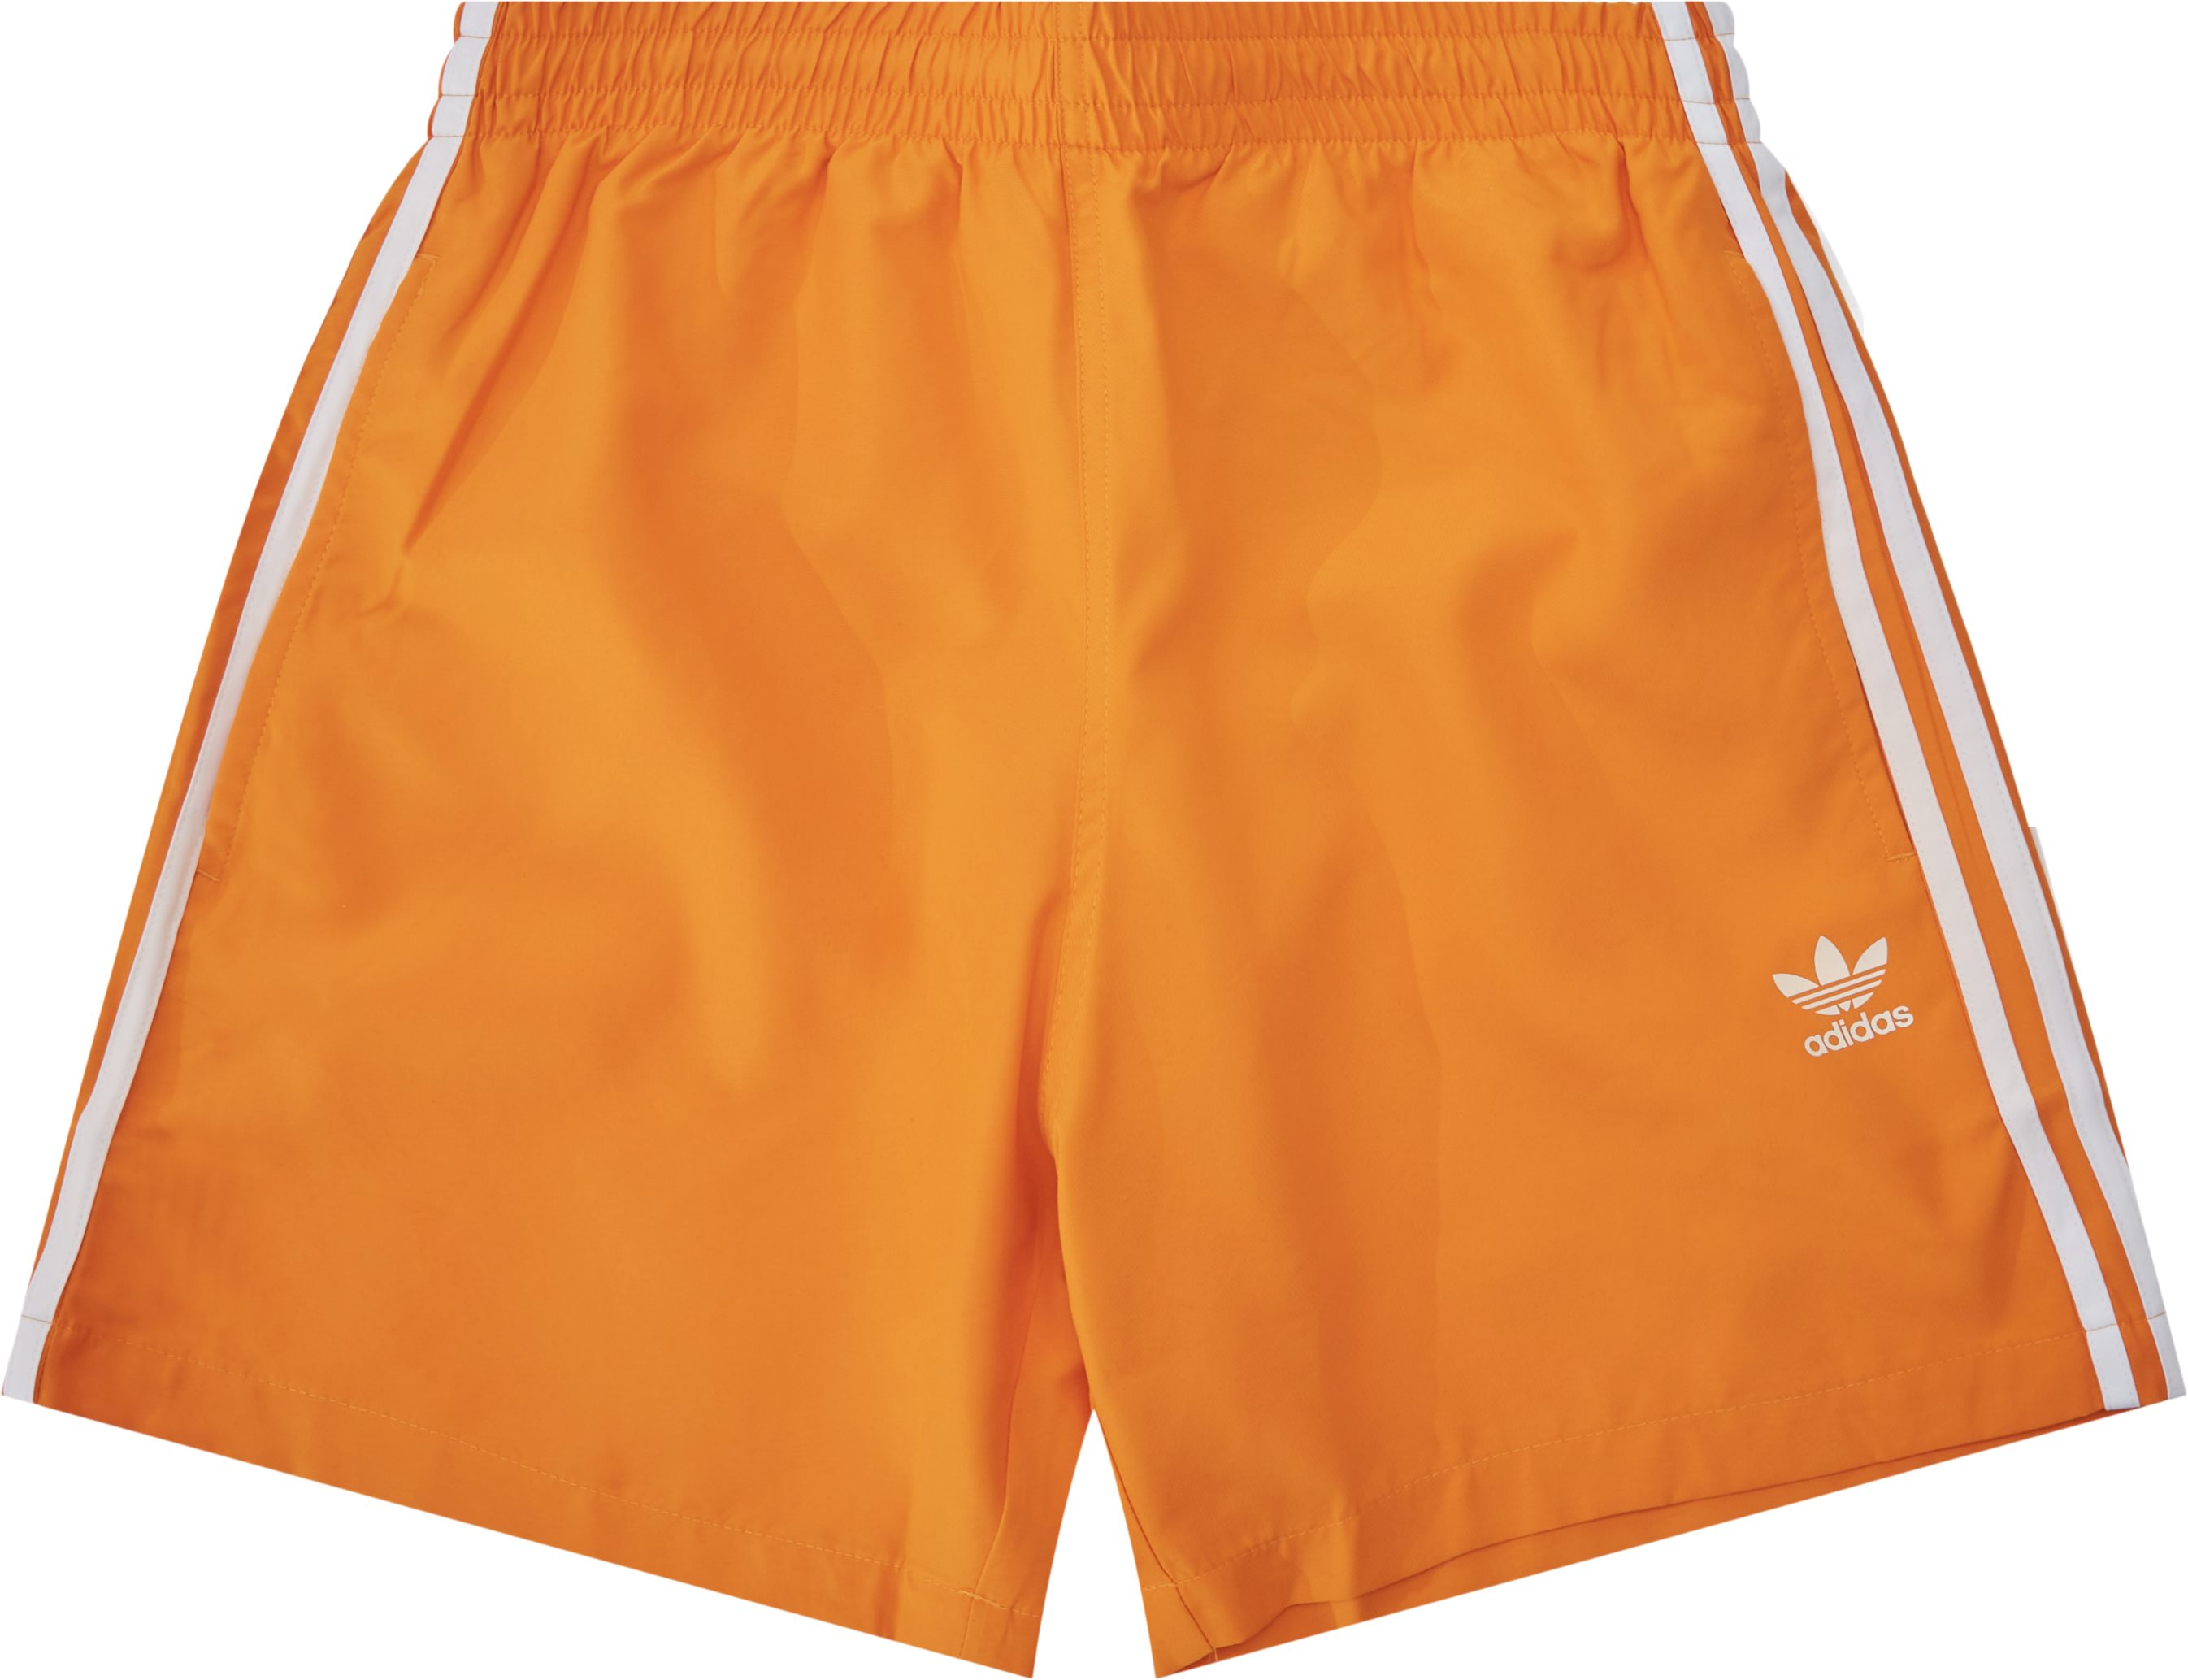 Adidas Originals Shorts 3-STRIPES SWIM SS22 Orange